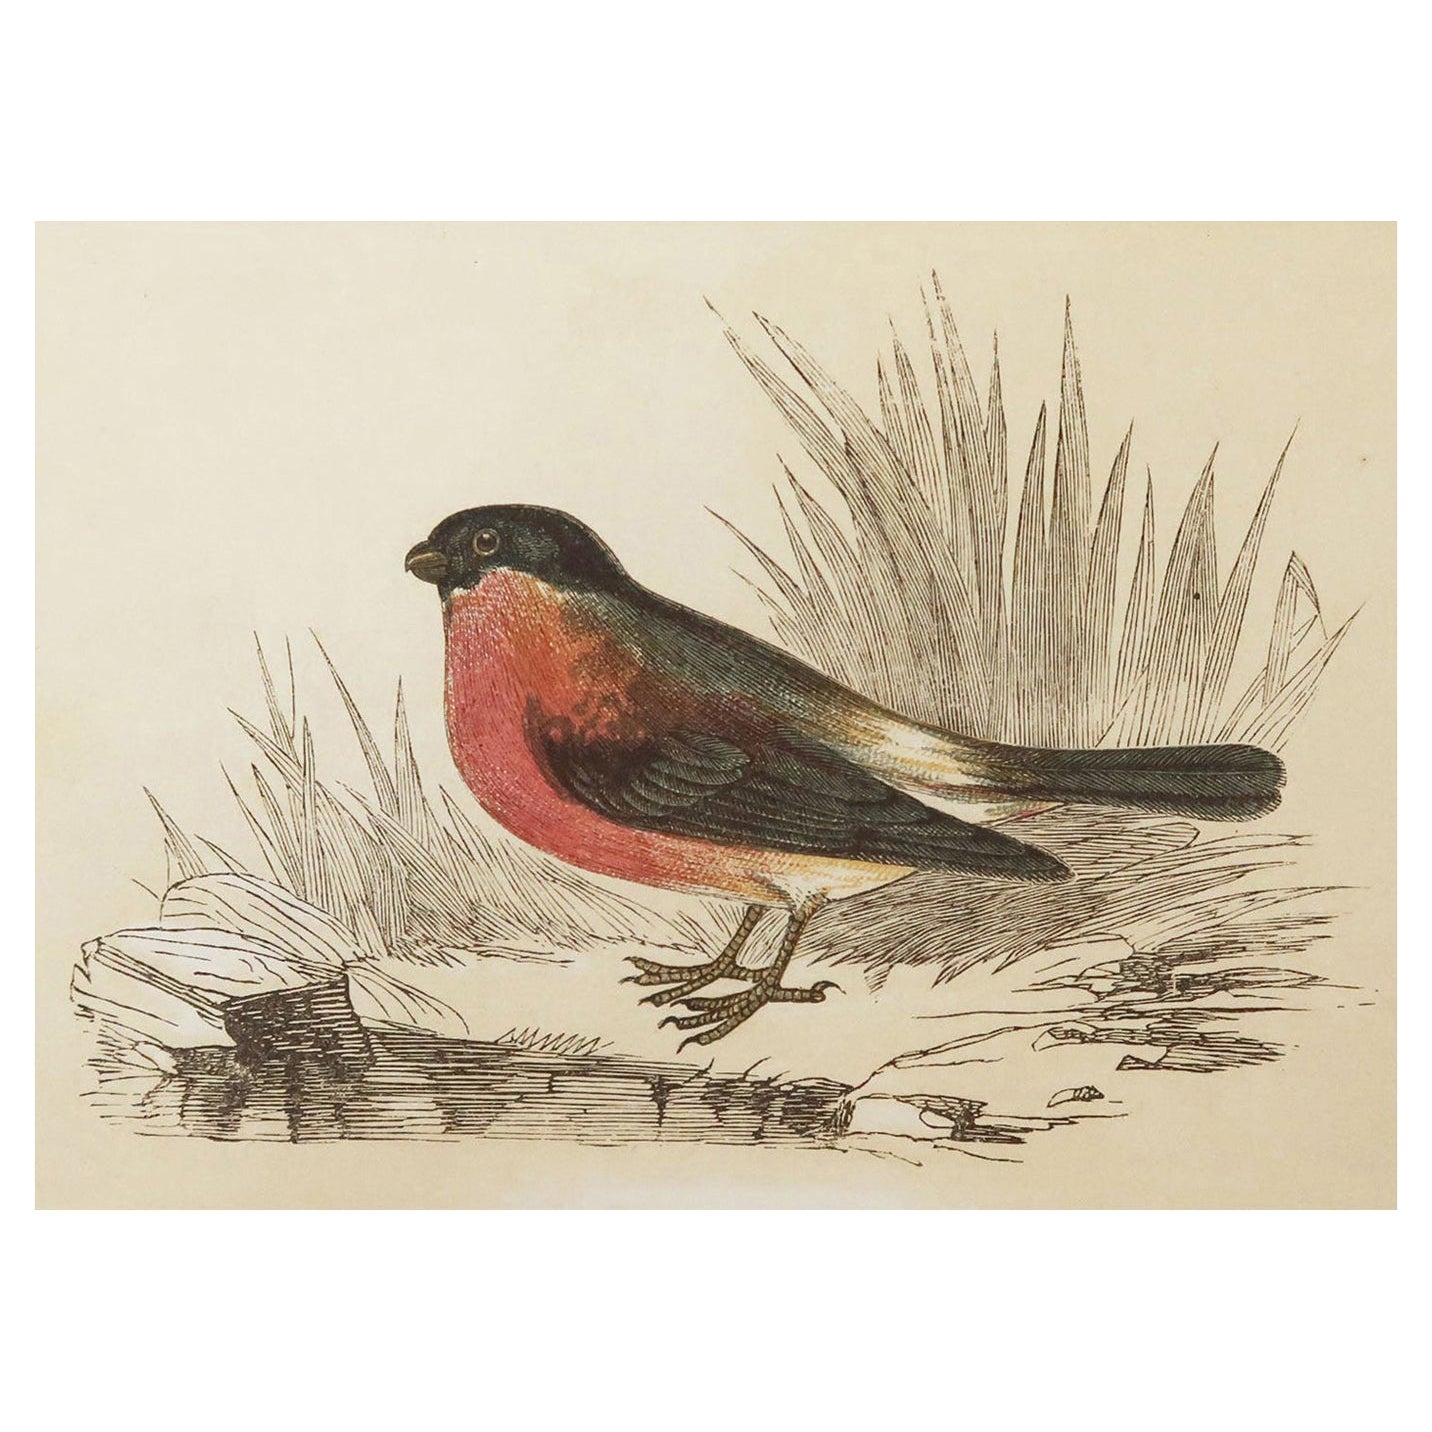 Original Antique Bird Print, the Bullfinch, Tallis, circa 1850